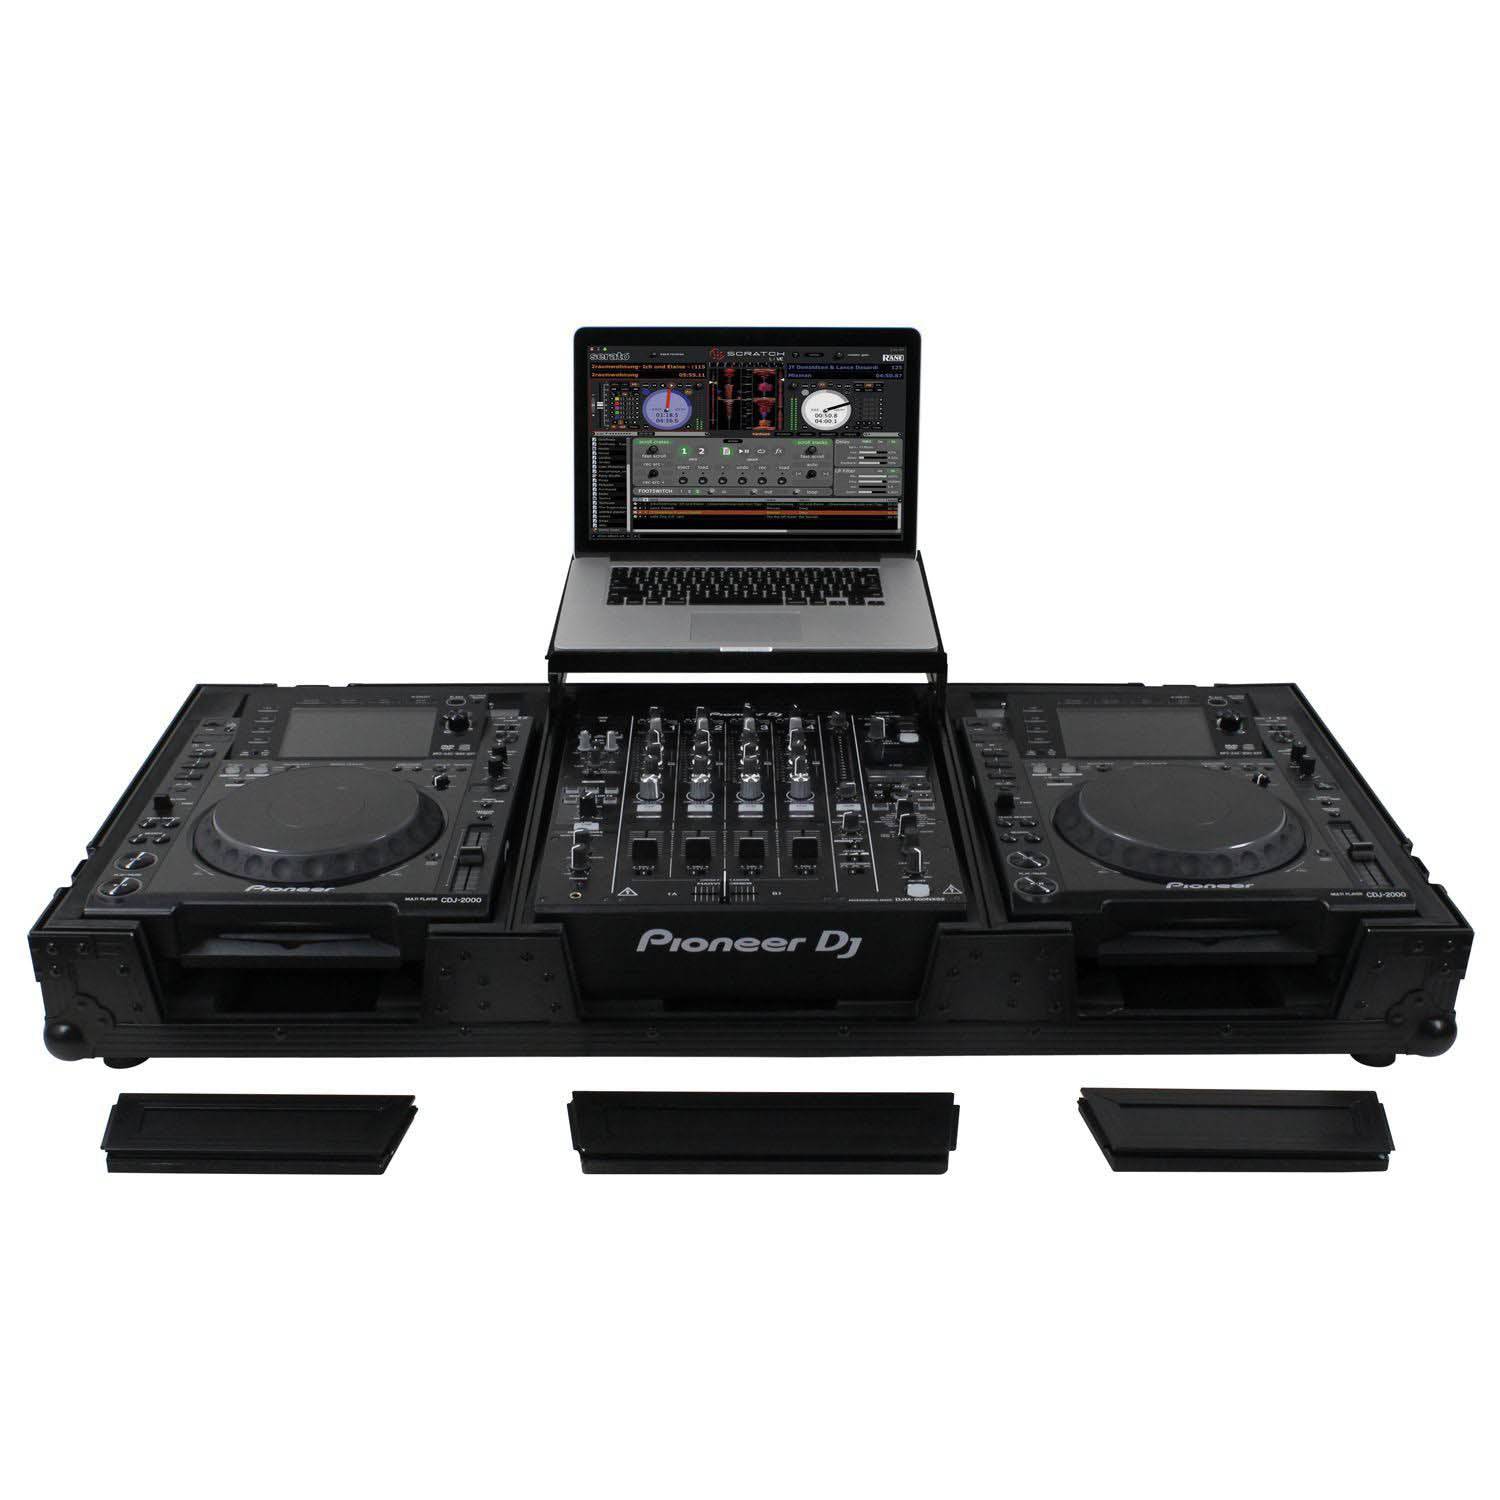 Odyssey FZGSL12CDJWRBL Low Profile Glide Style 10″ Format DJ Mixer - Hollywood DJ